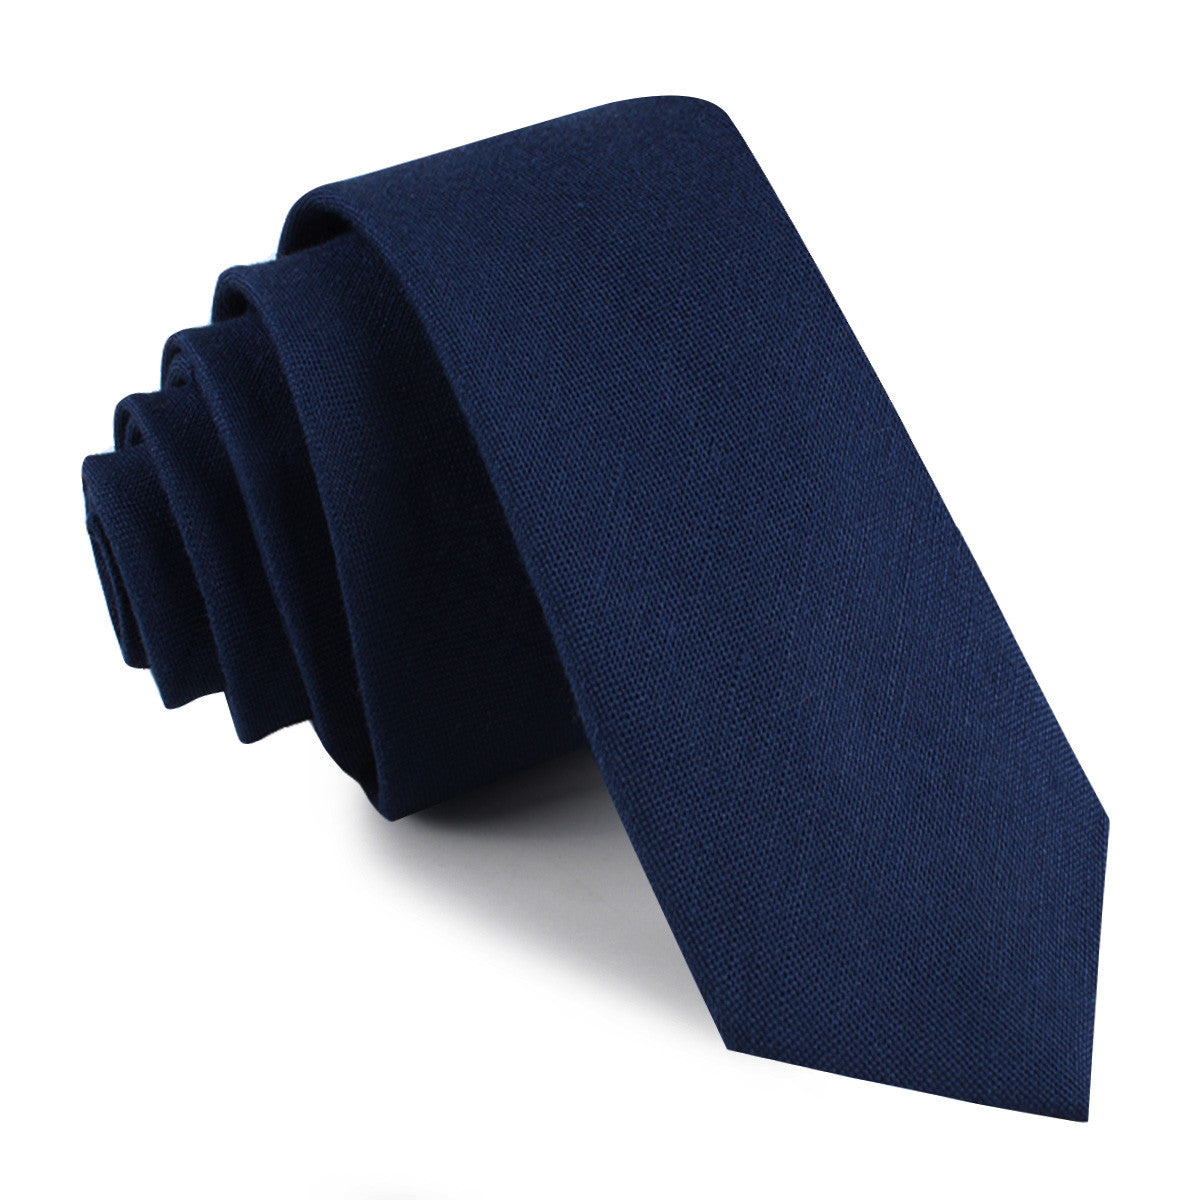 Jeune Fille Endormie Navy Linen Skinny Tie | Dark Blue Mens Slim Ties ...